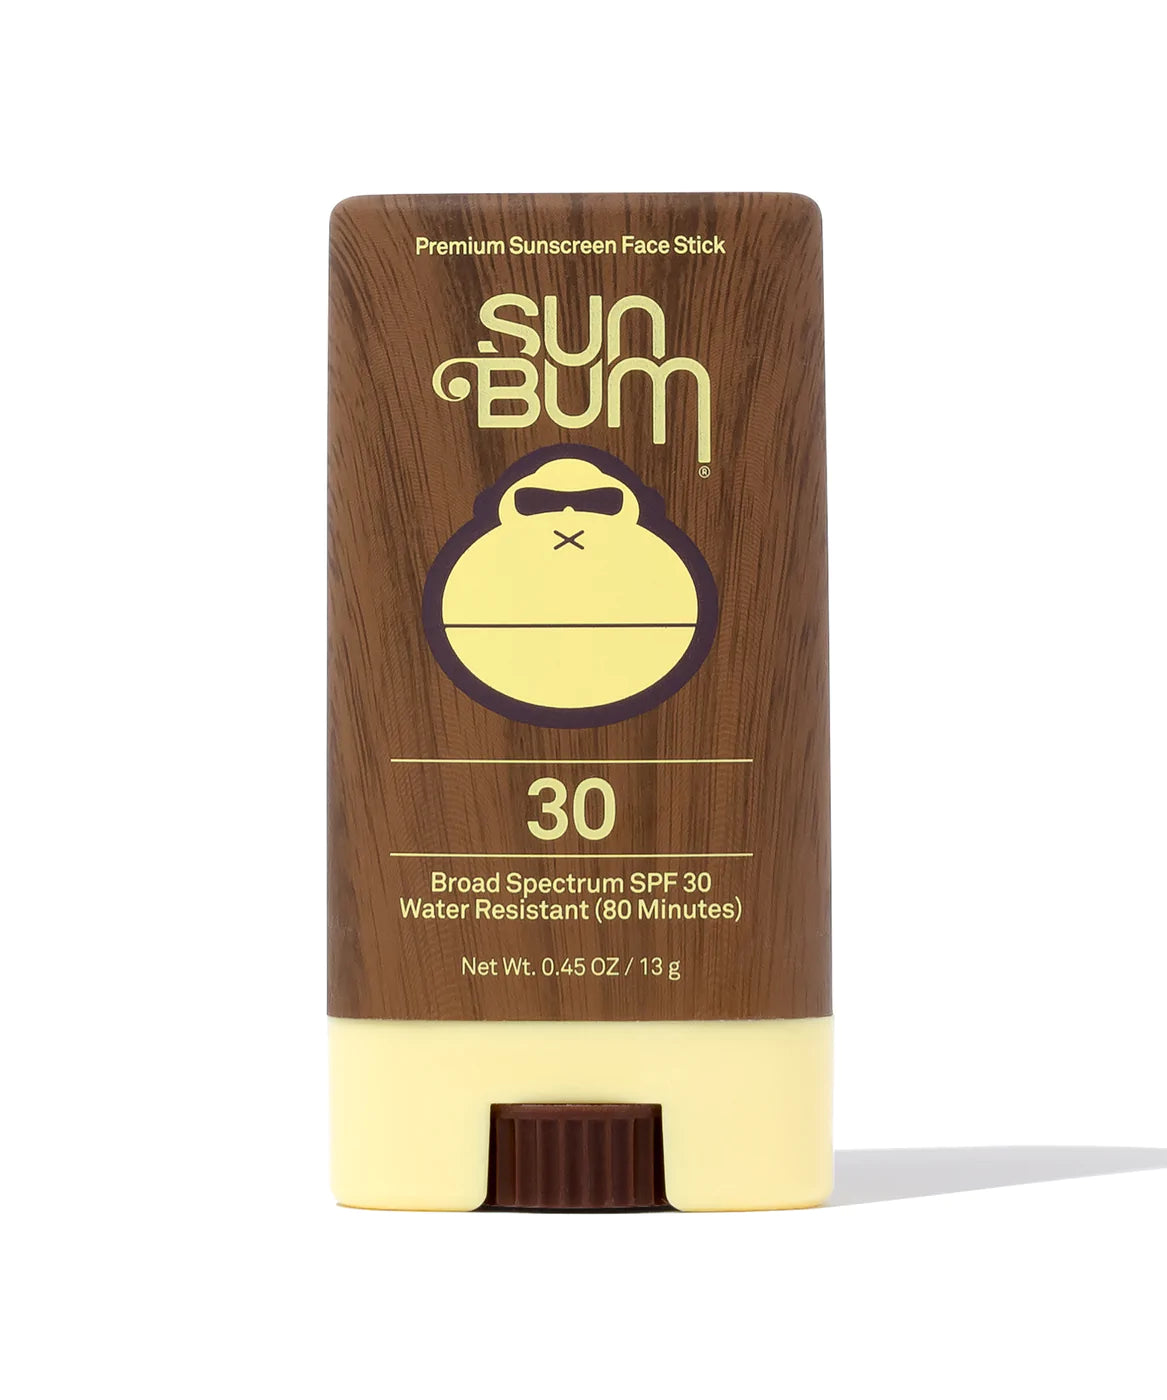 Sun Bum Spf 30 Face Stick